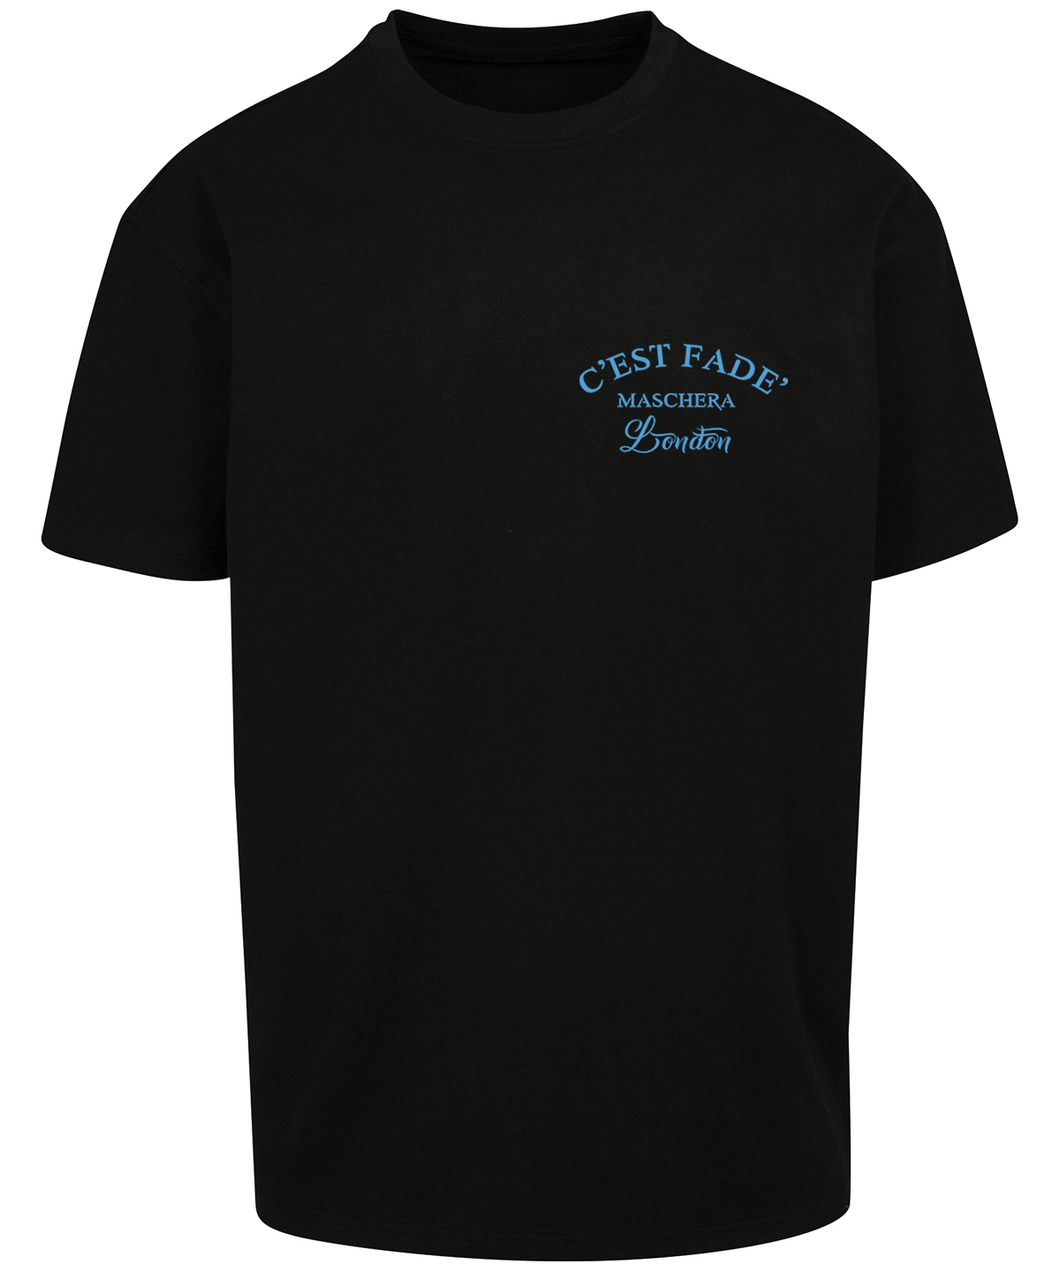 Classic logo print T-shirt - blue on black tee